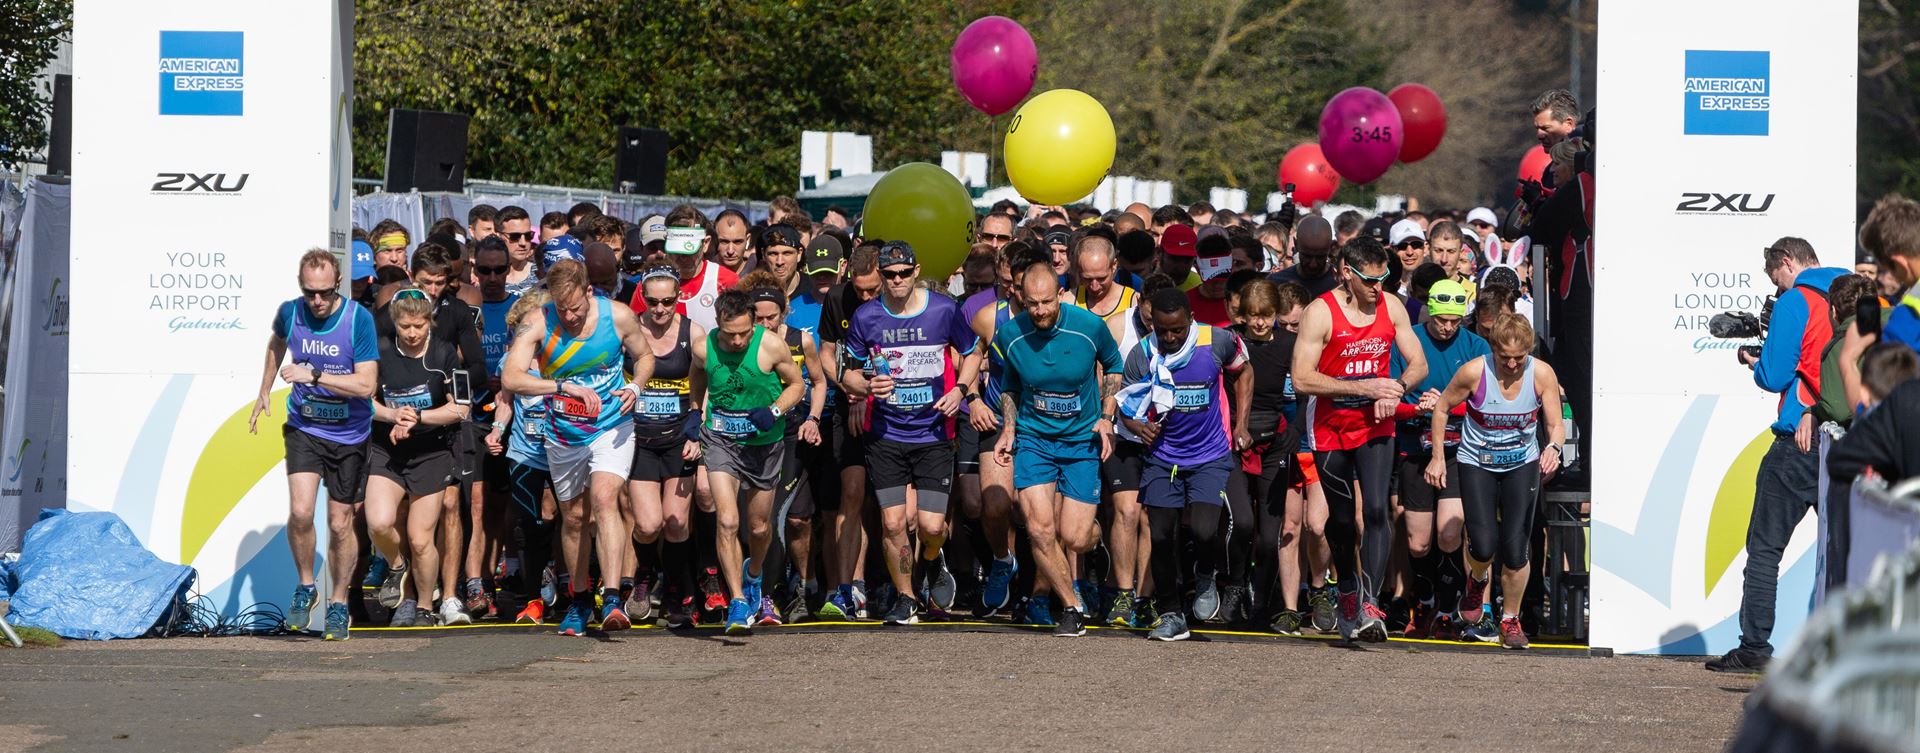 A photo of the start line at the Brighton Marathon